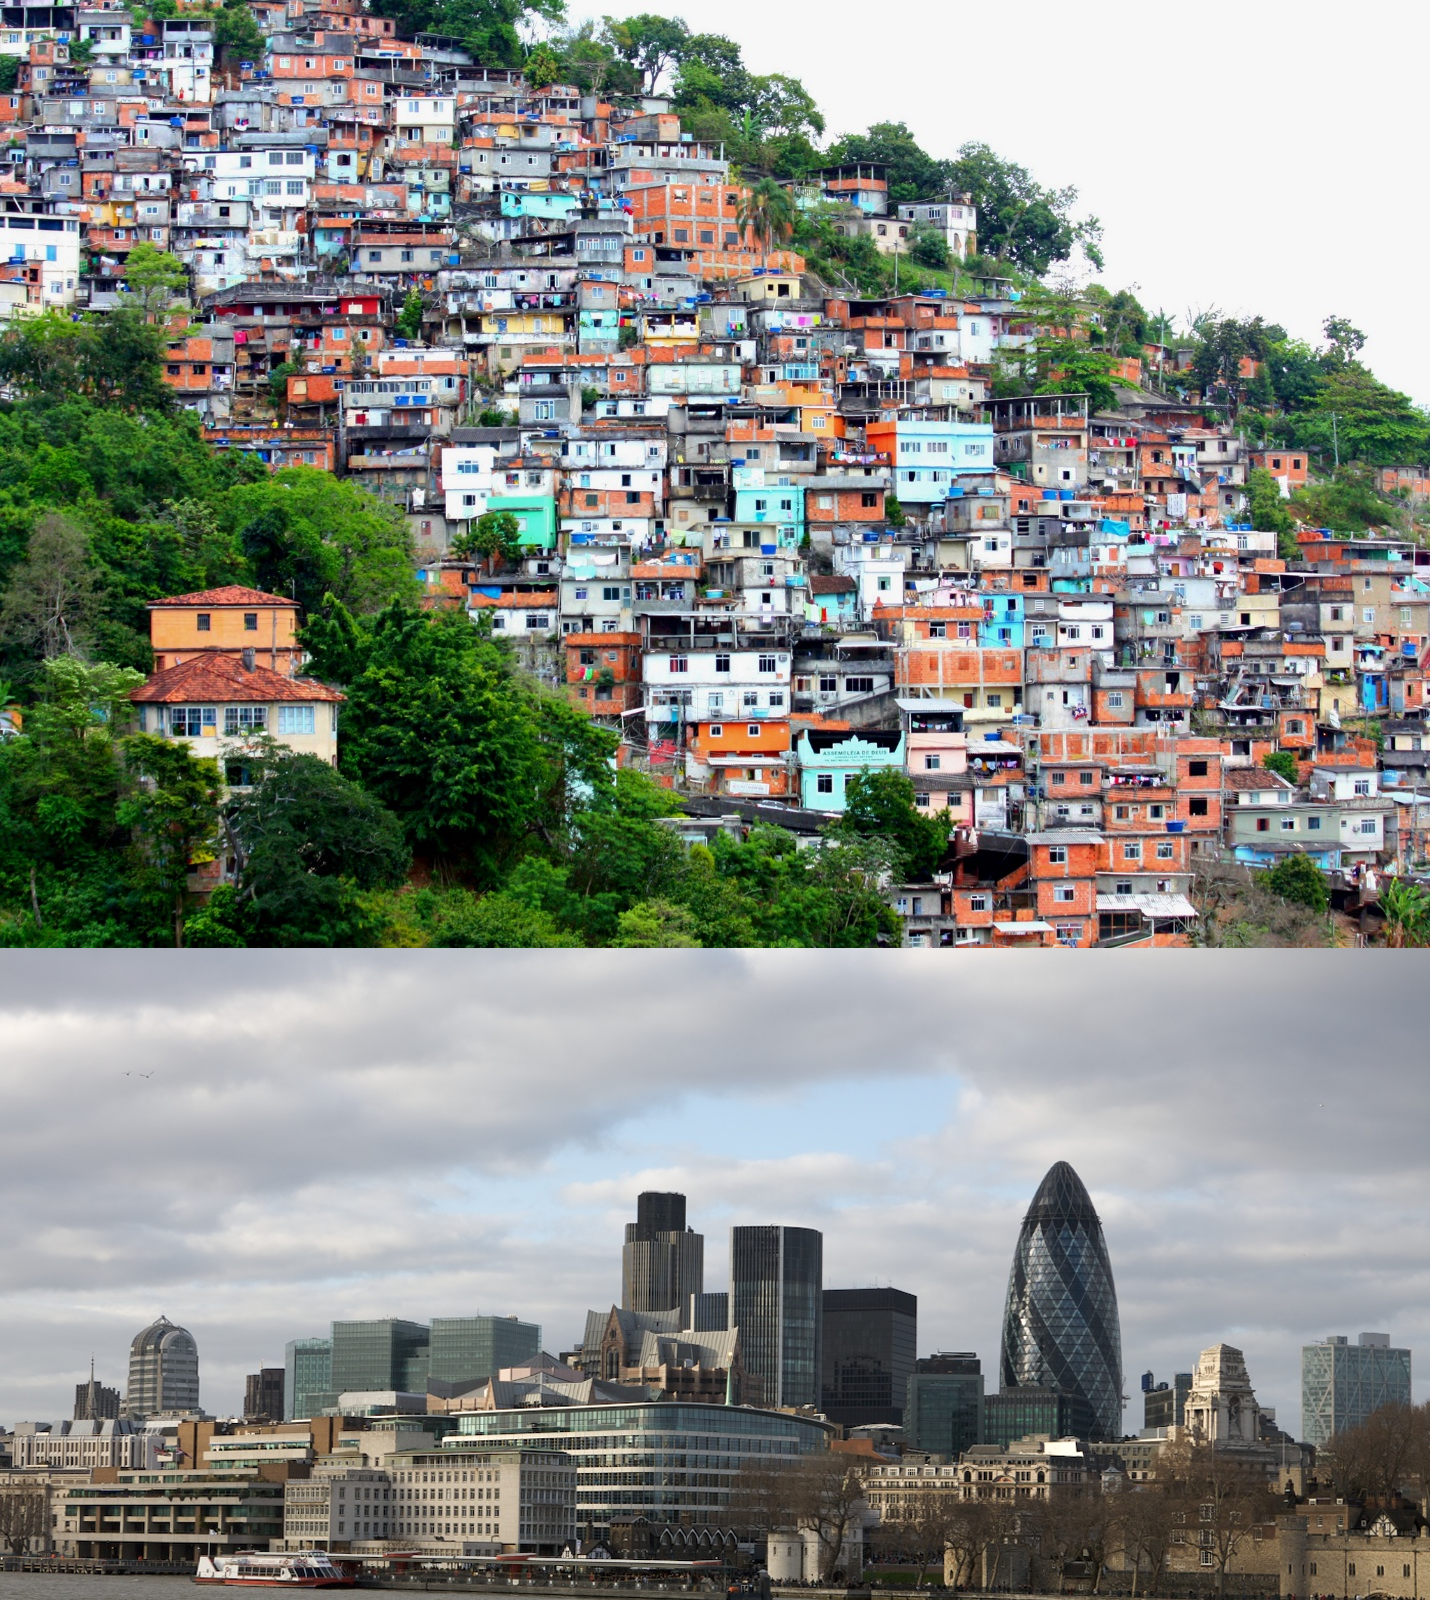 Contrasting photos of Rio de Janeiro and the London Financial District